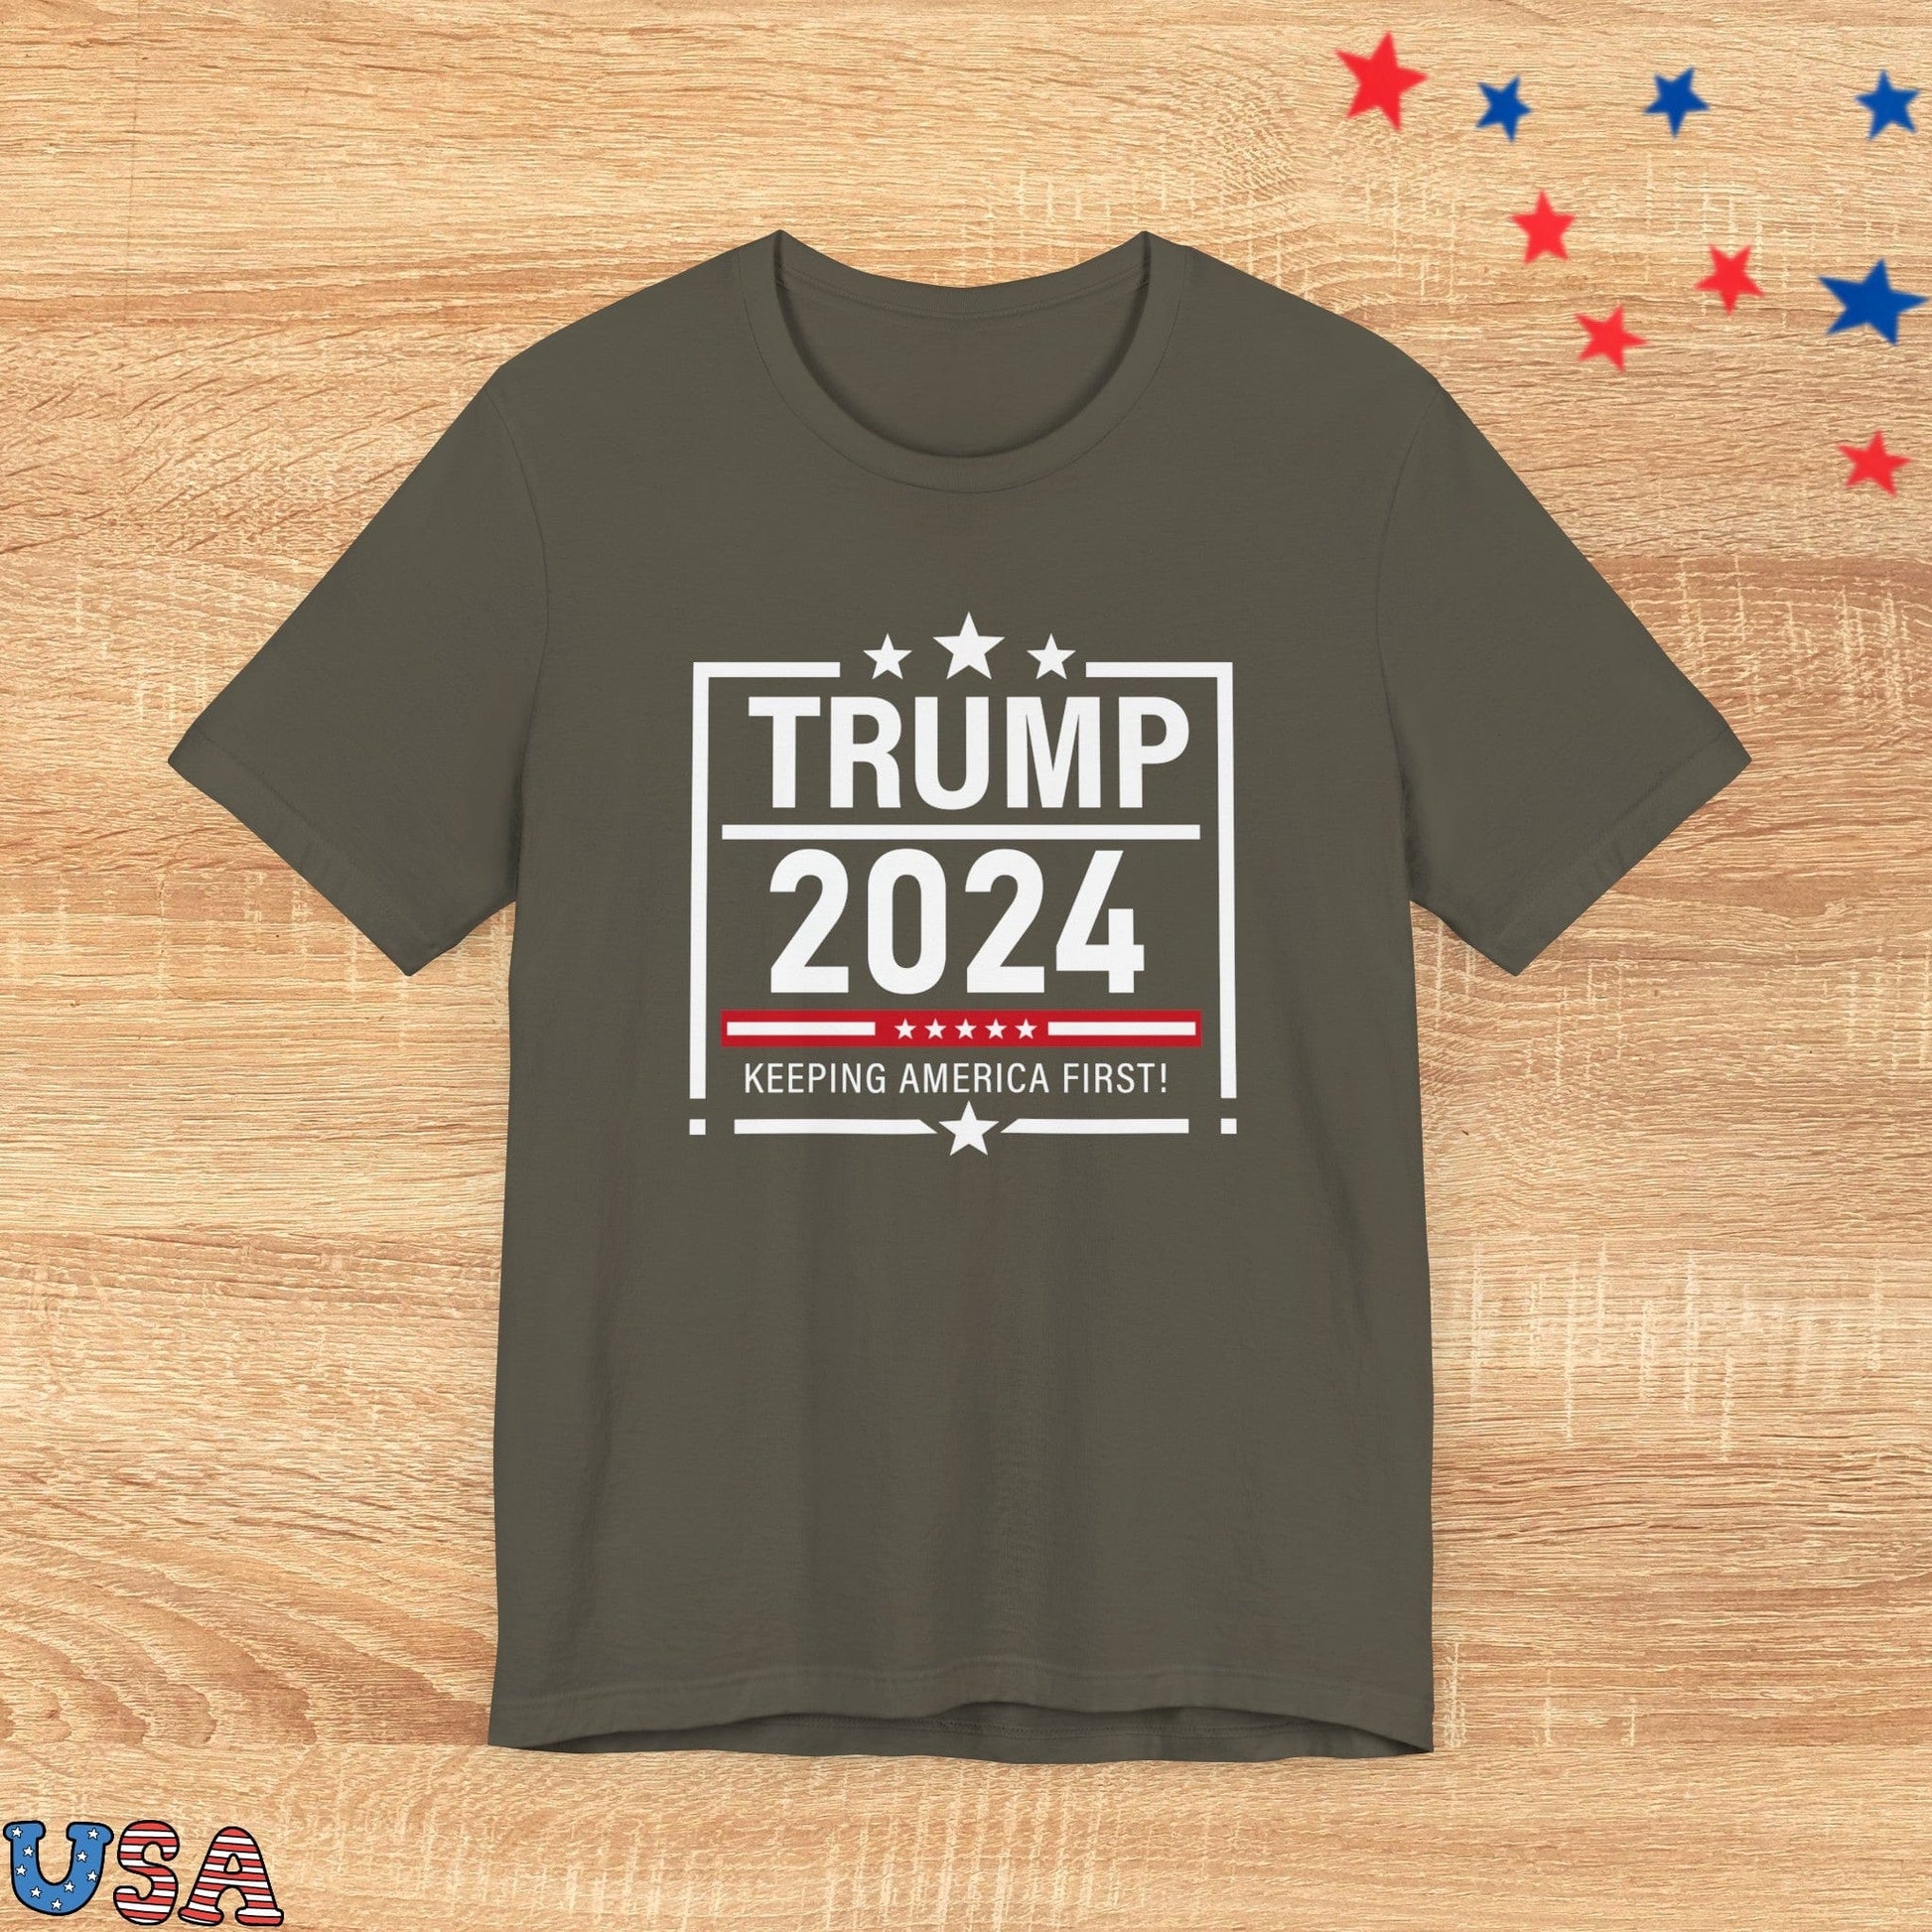 patriotic stars T-Shirt Army / XS Keeping America First!